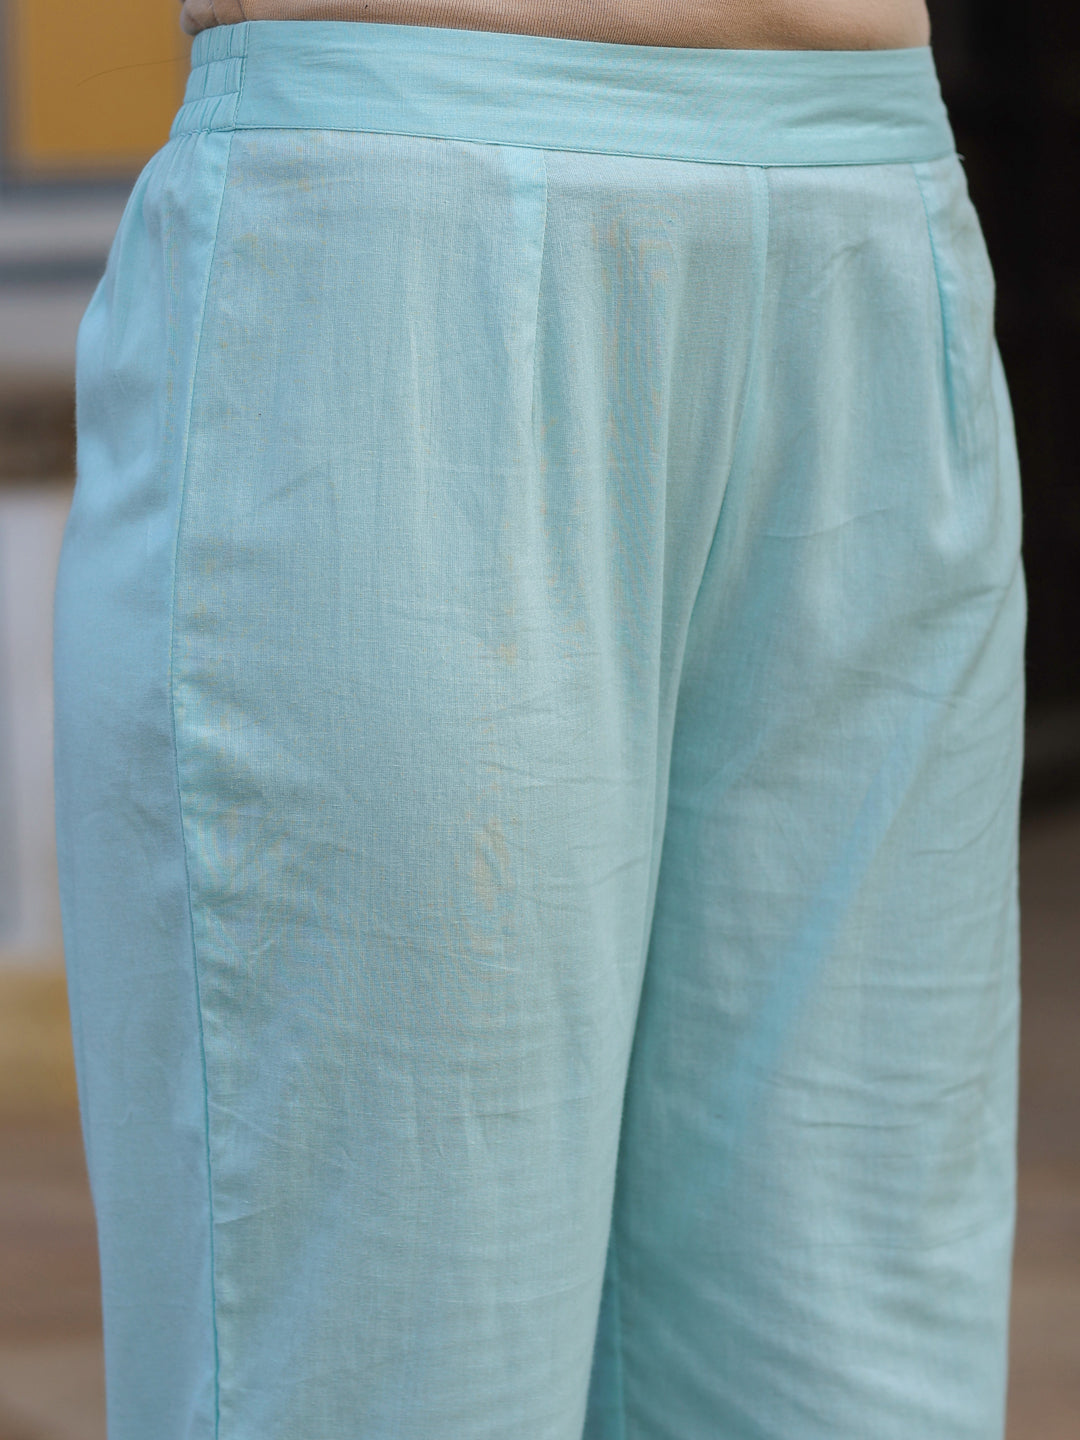 Juniper Women's Sky-blue Cambric Floral Placement Printed Straight Fit Kurta, Pant & Dupatta Set